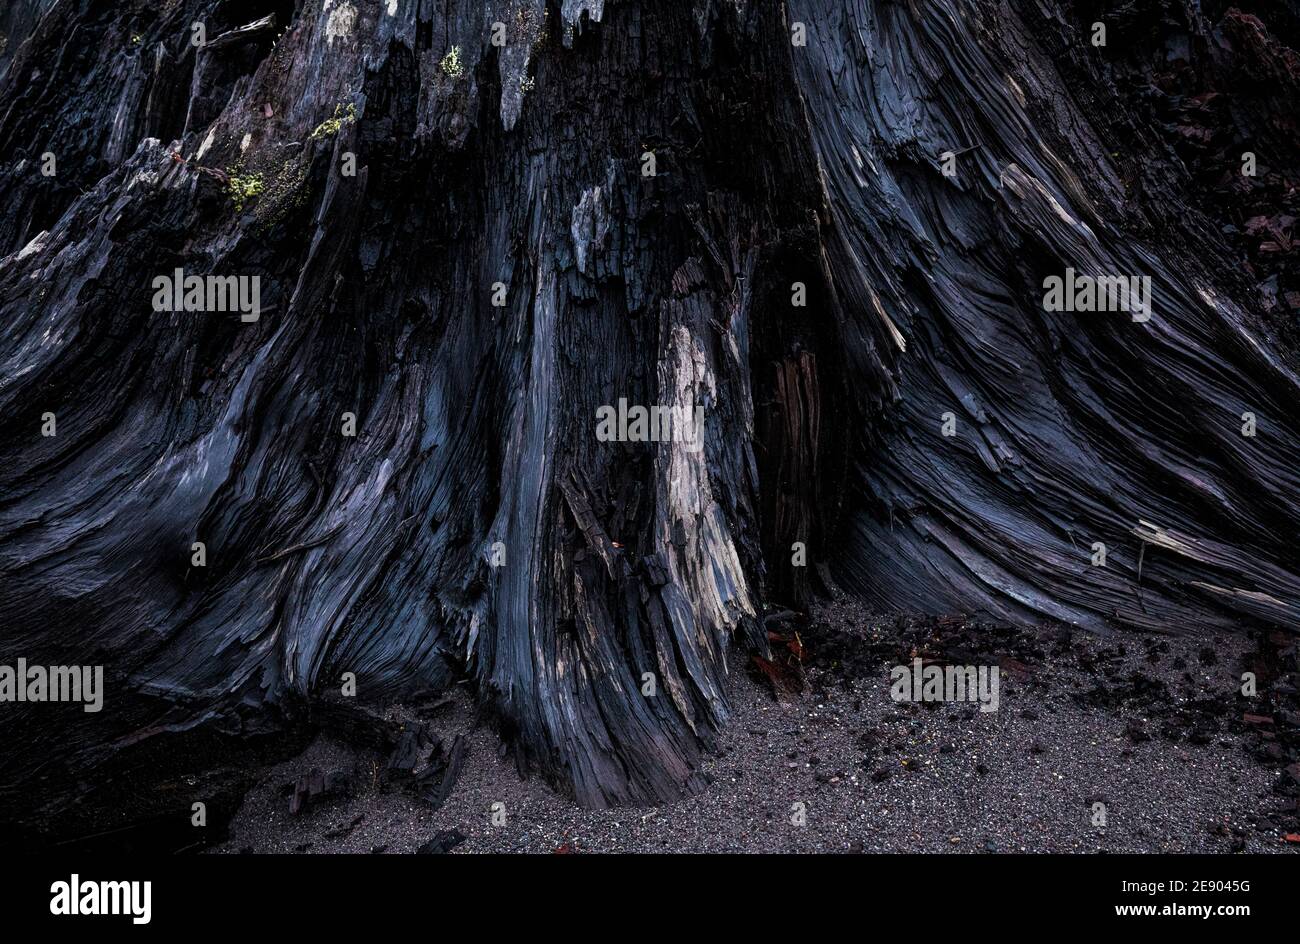 Tree stump detail along the banks of the Nisqually river, Mount Rainier National Park boundary, Washington, USA. Stock Photo